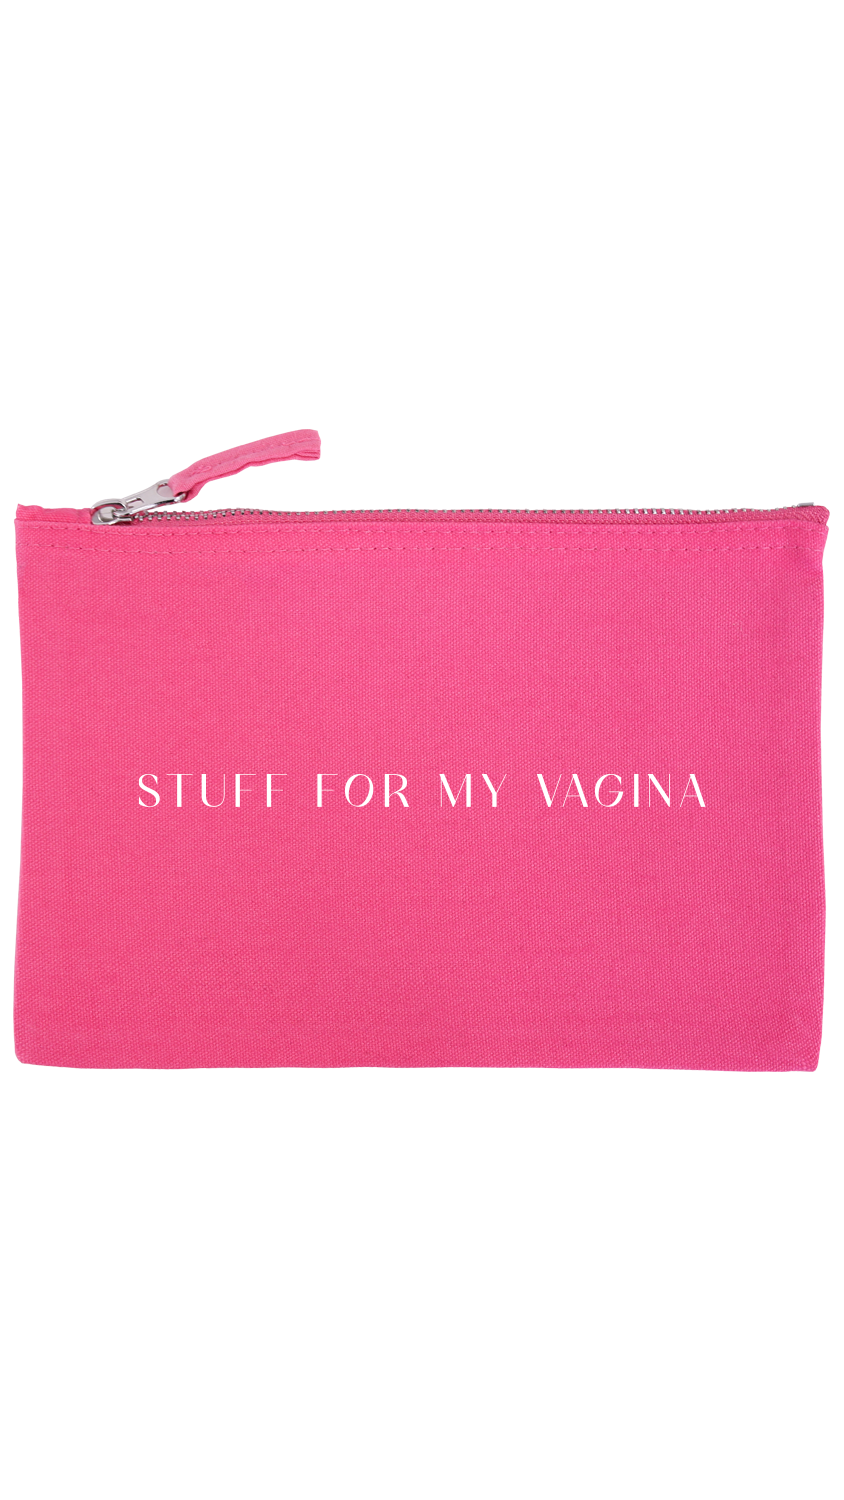 Stuff for my vagina Mini bag